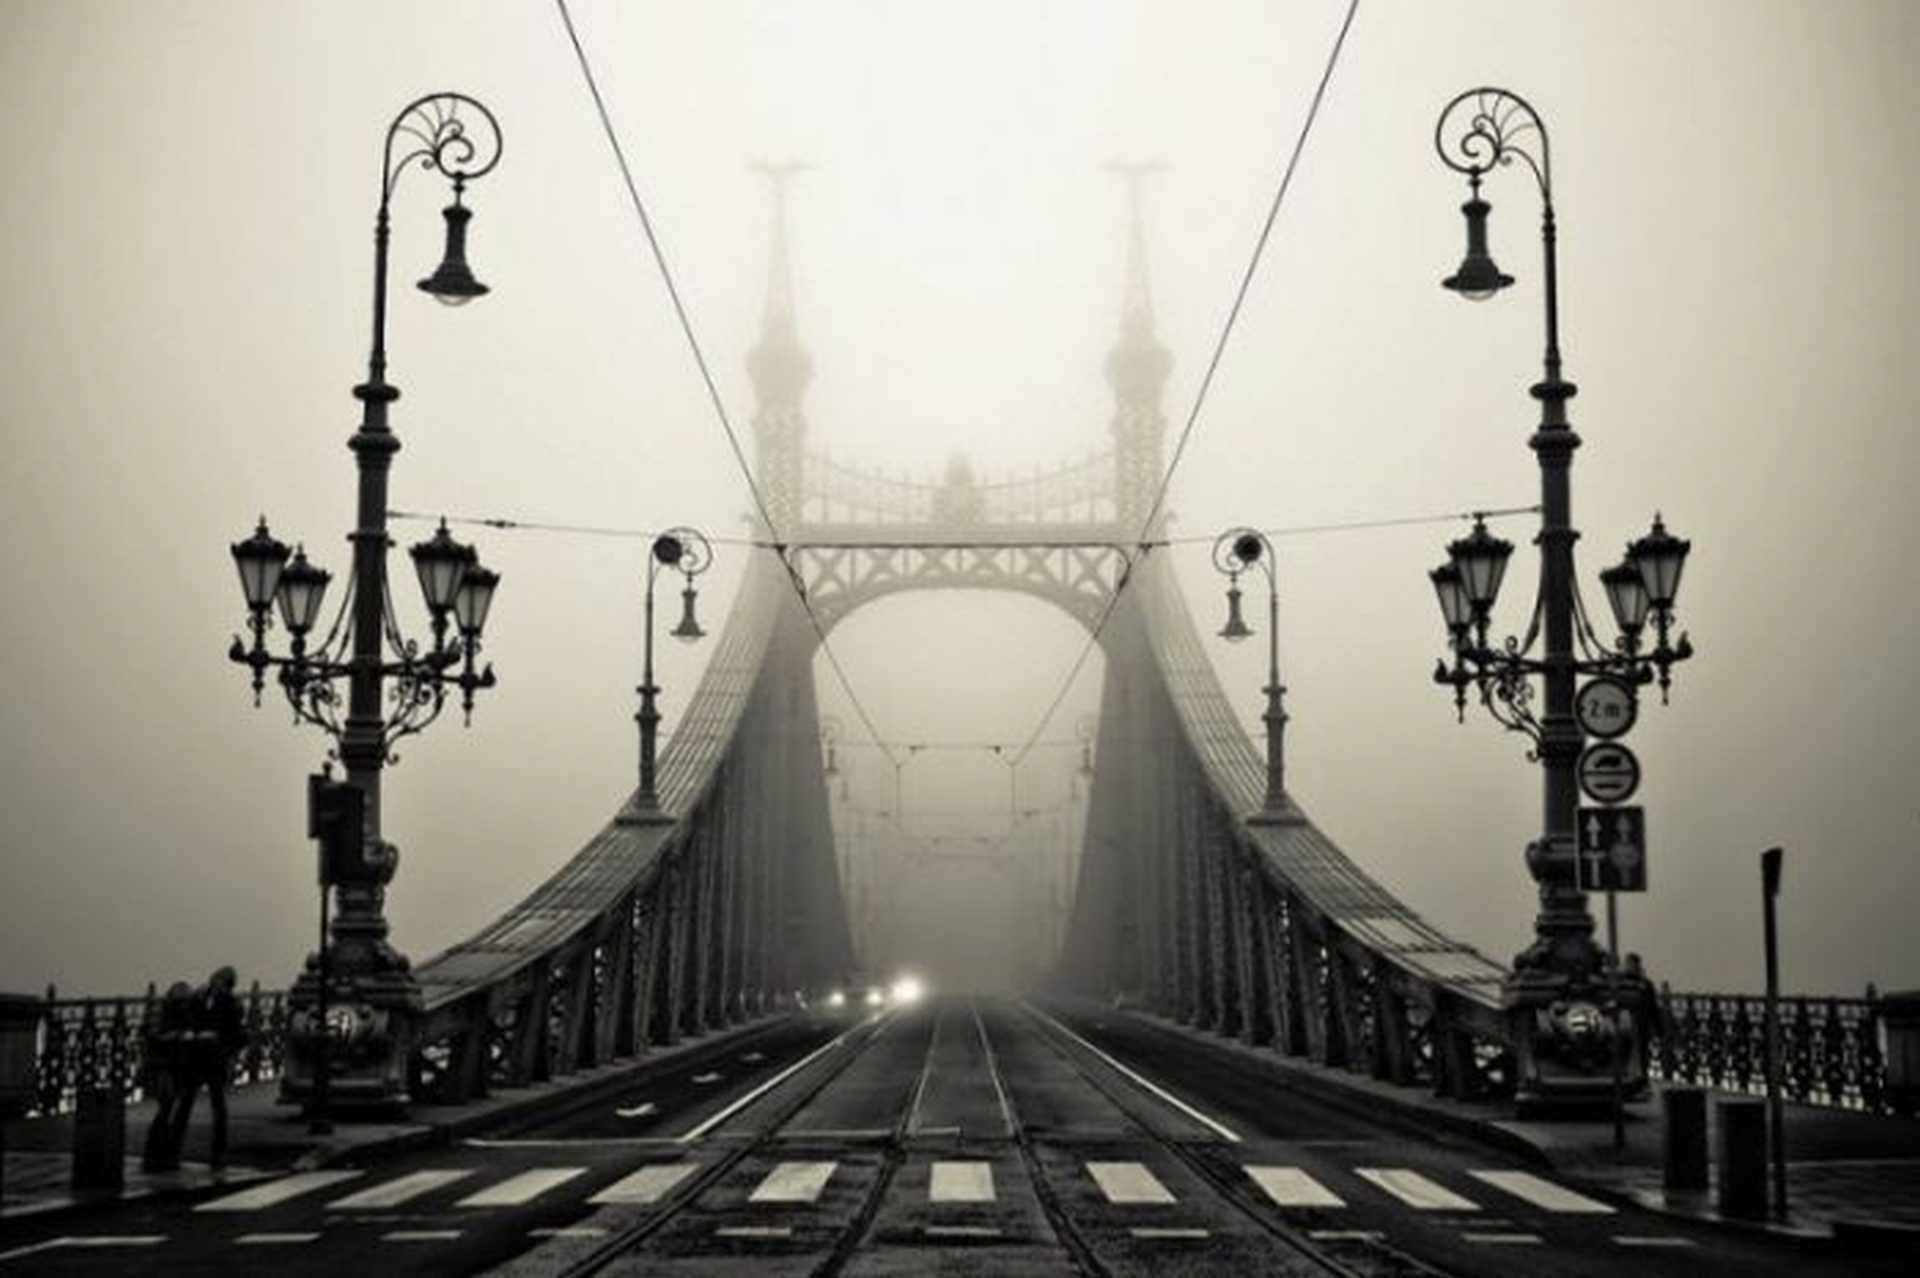 Liberty Bridge, Budapest Backgrounds on Wallpapers Vista